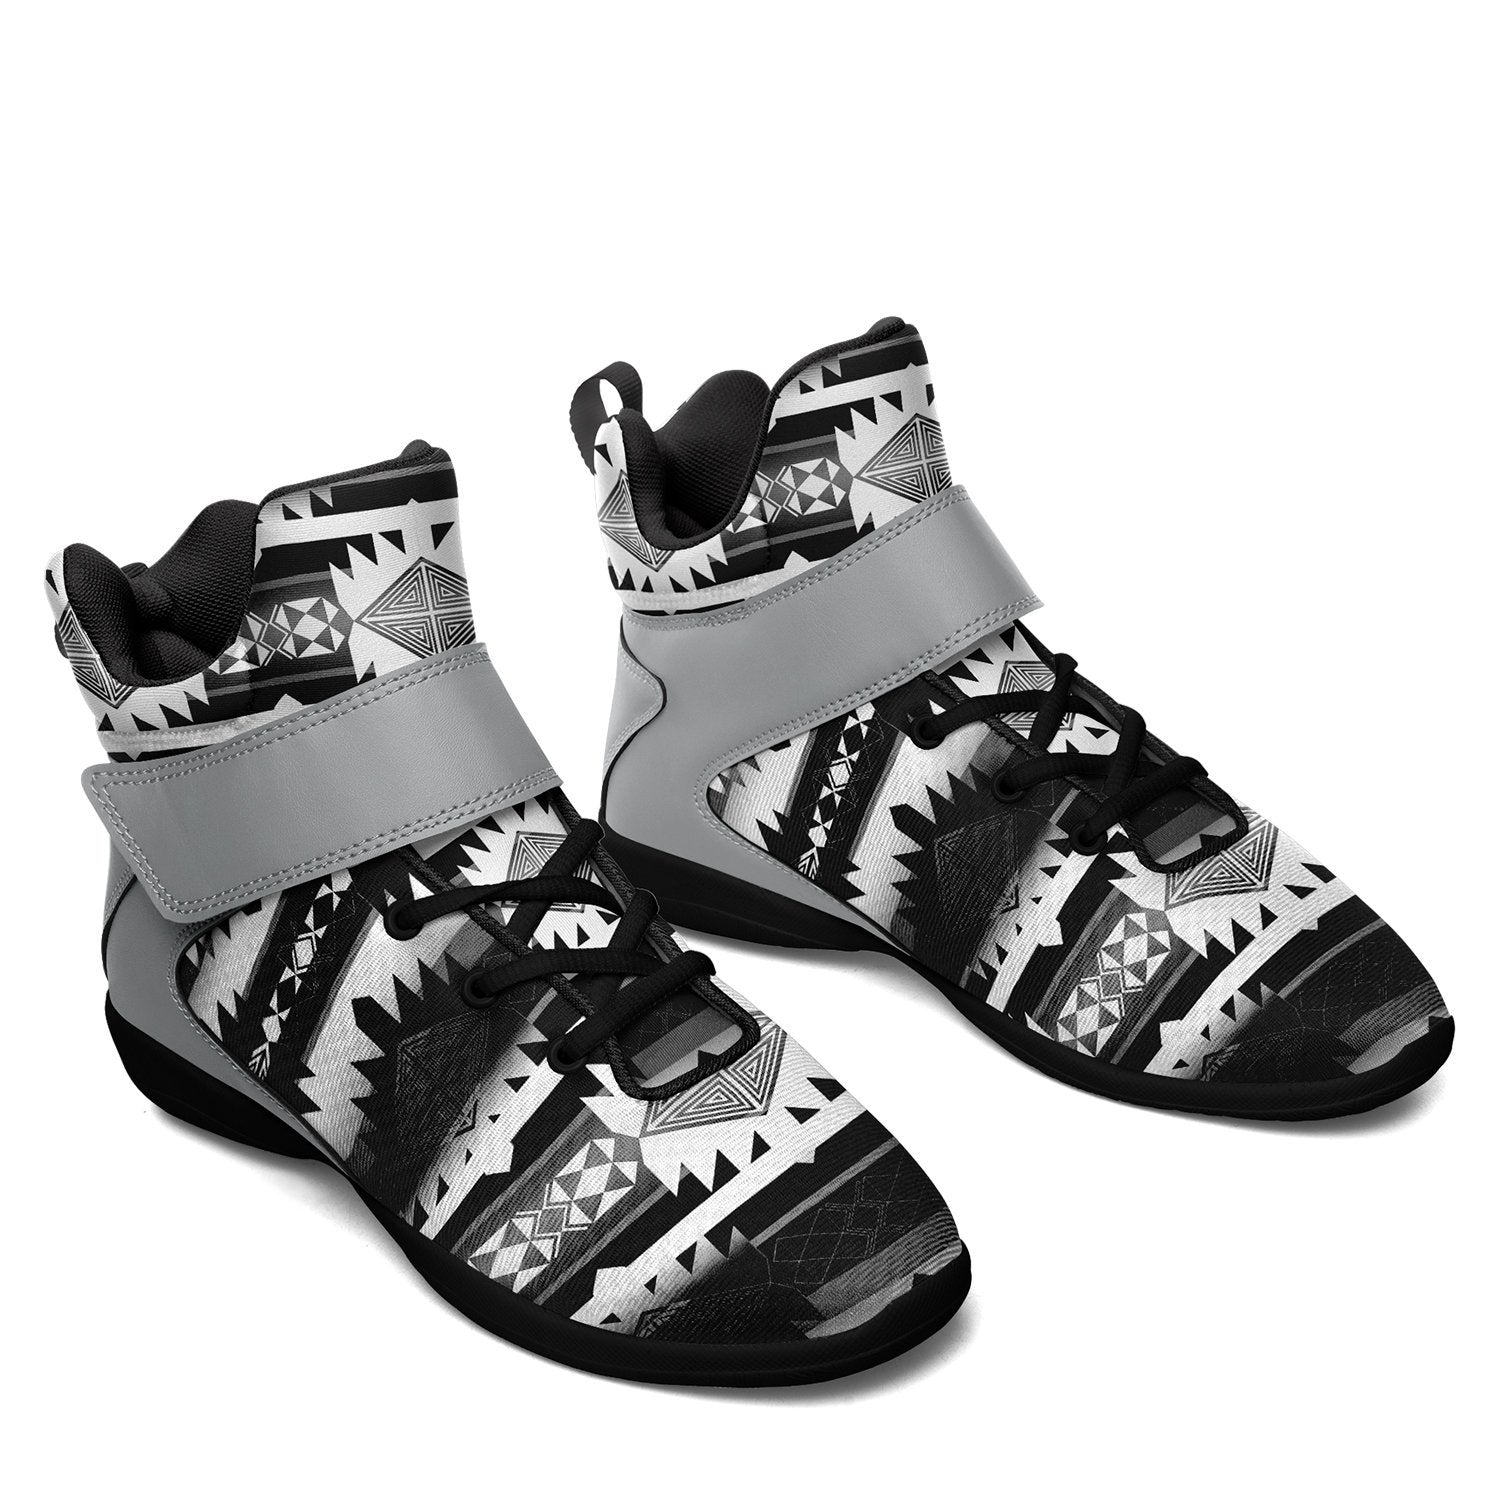 Okotoks Black and White Ipottaa Basketball / Sport High Top Shoes - Black Sole 49 Dzine 